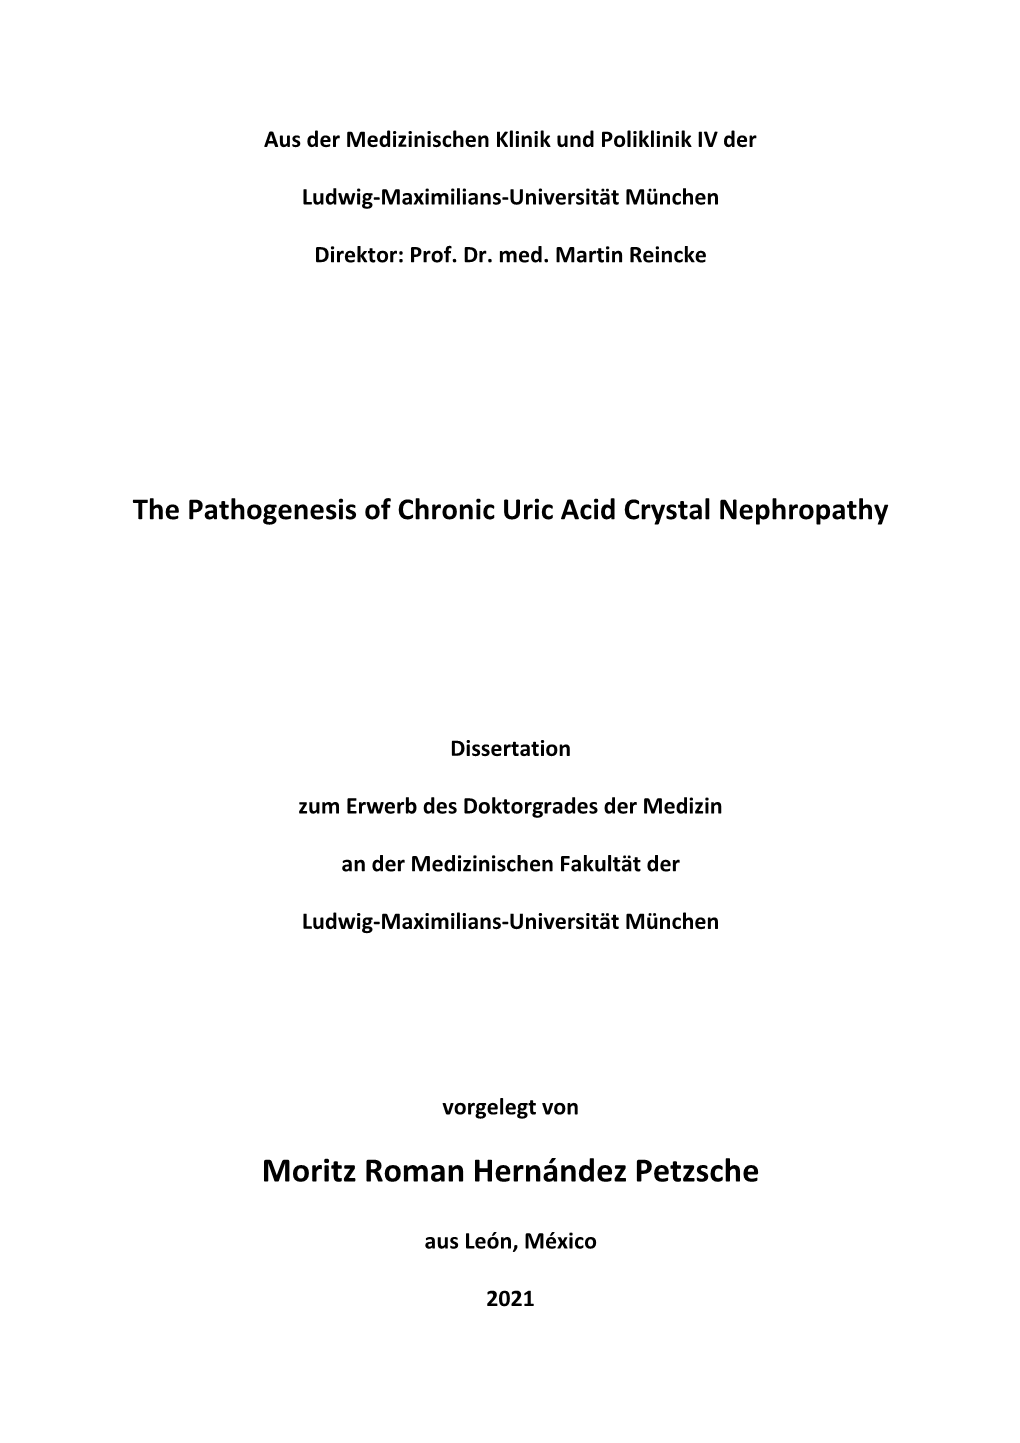 The Pathogenesis of Chronic Uric Acid Crystal Nephropathy